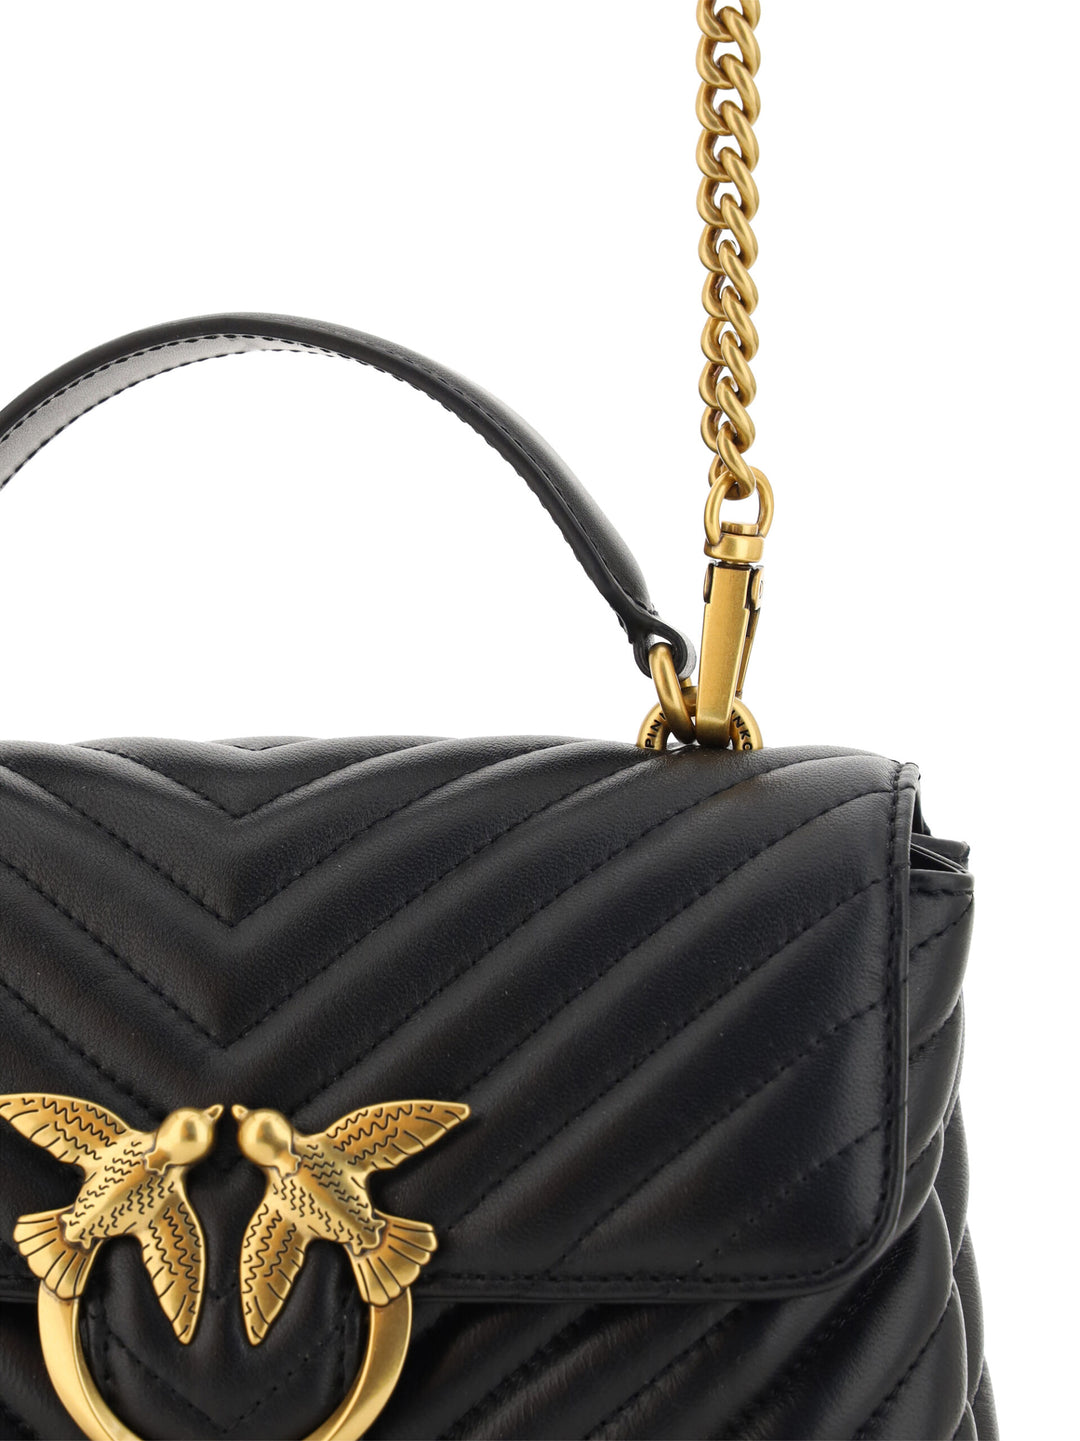 PINKO Black Calf Leather Love Lady Mini Handbag